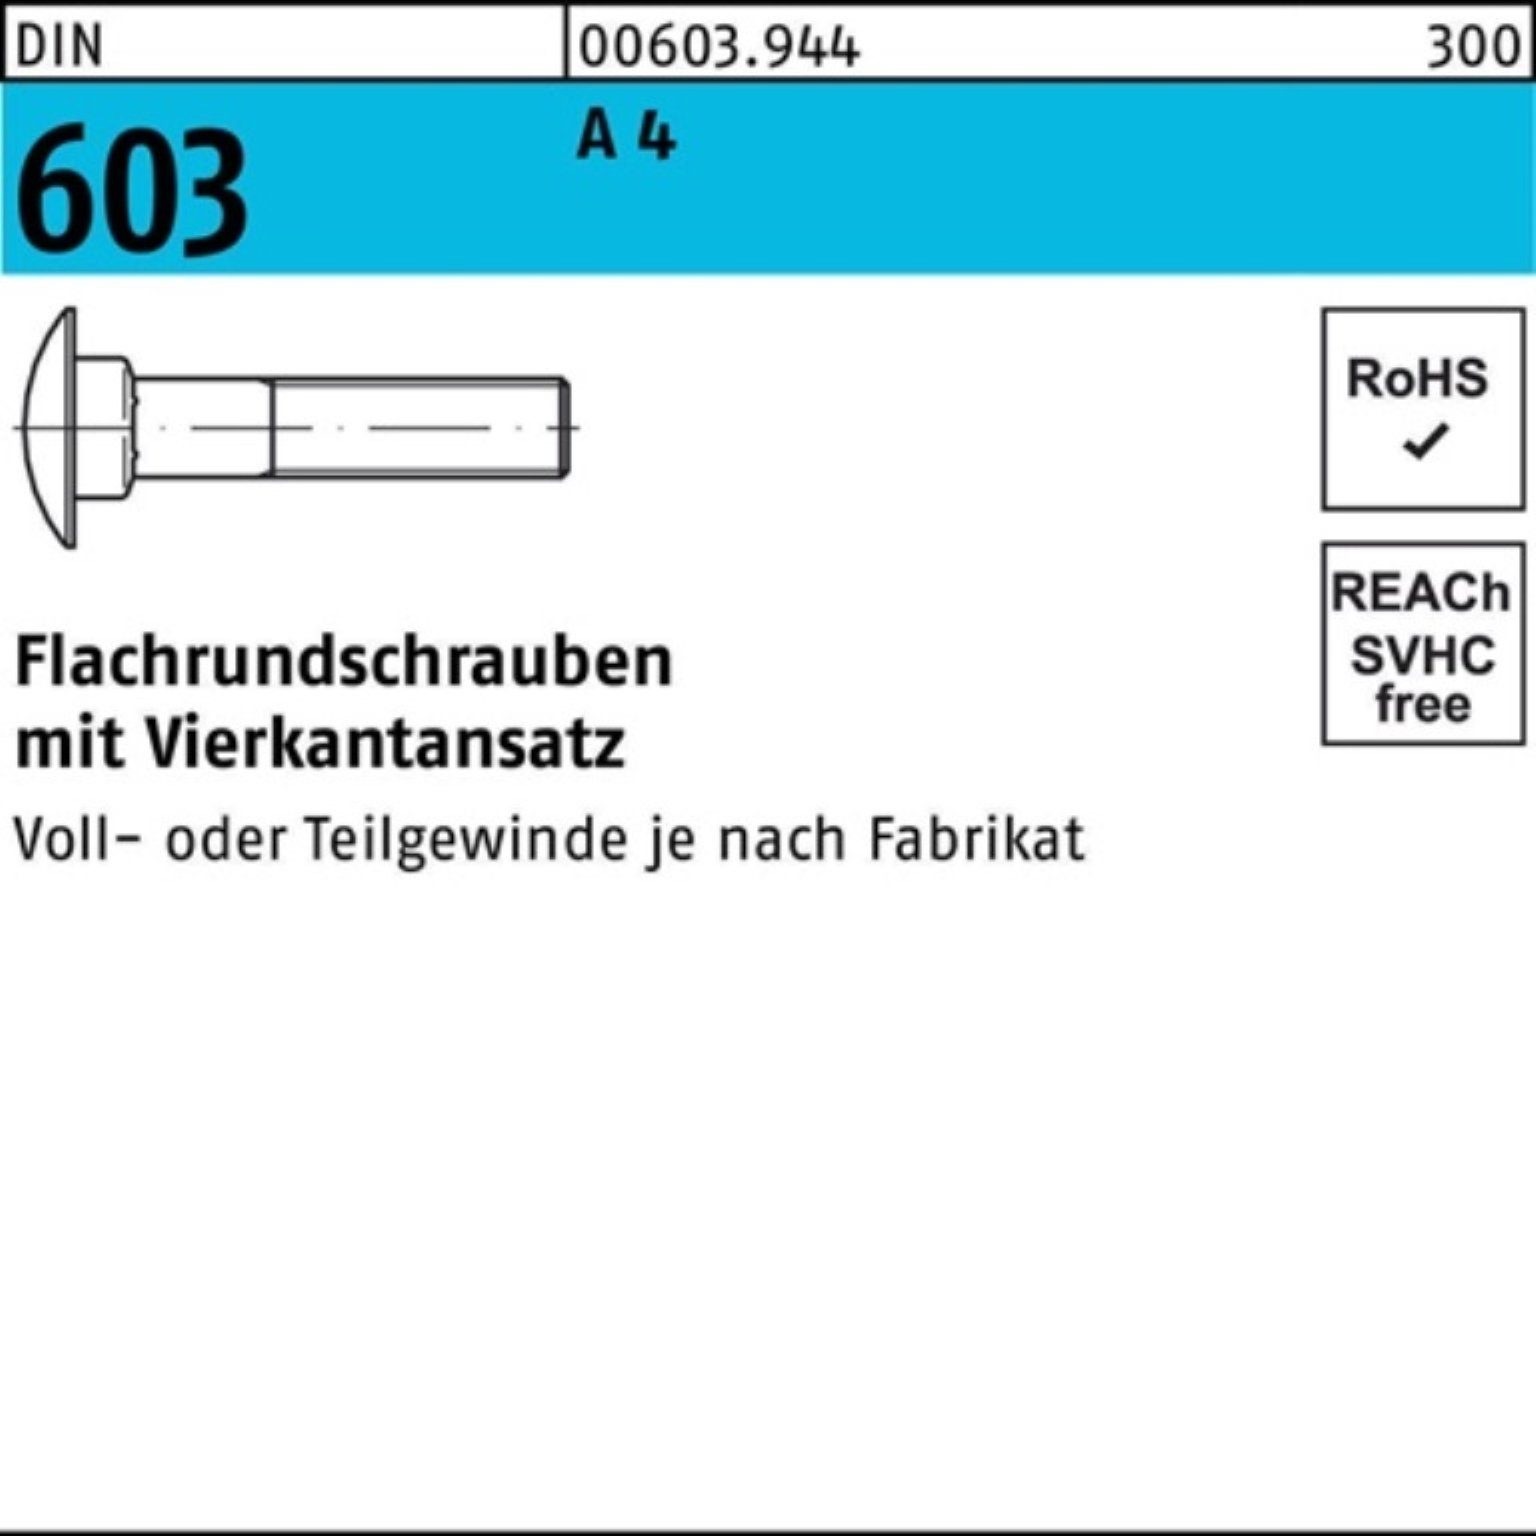 Reyher Schraube 100er Pack Flachrundschraube DIN 603 Vierkantansatz M12x 110 A 4 1 St